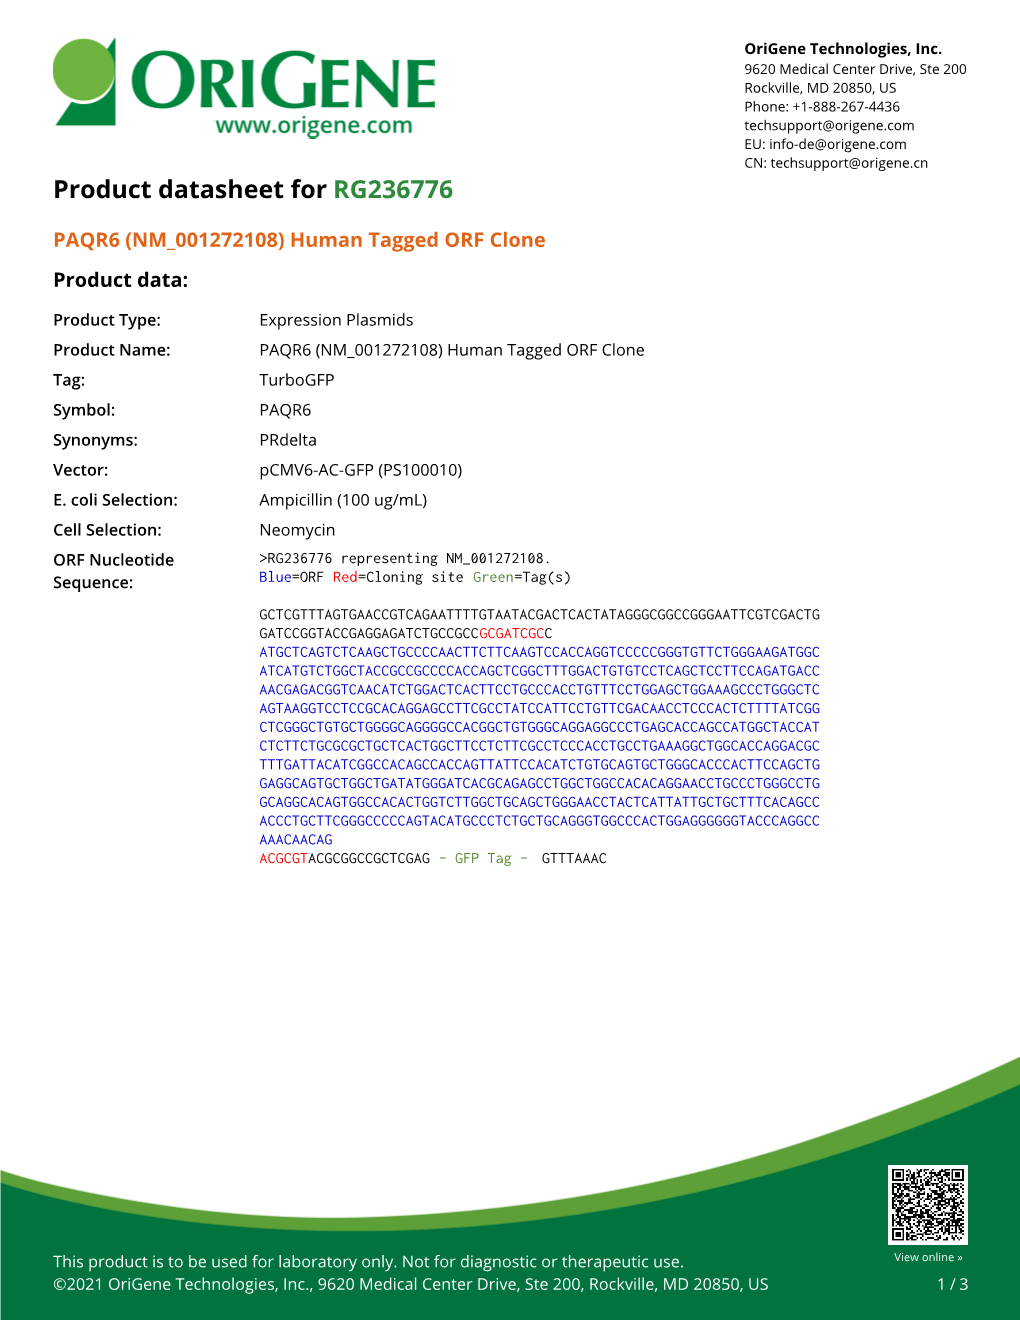 PAQR6 (NM 001272108) Human Tagged ORF Clone – RG236776